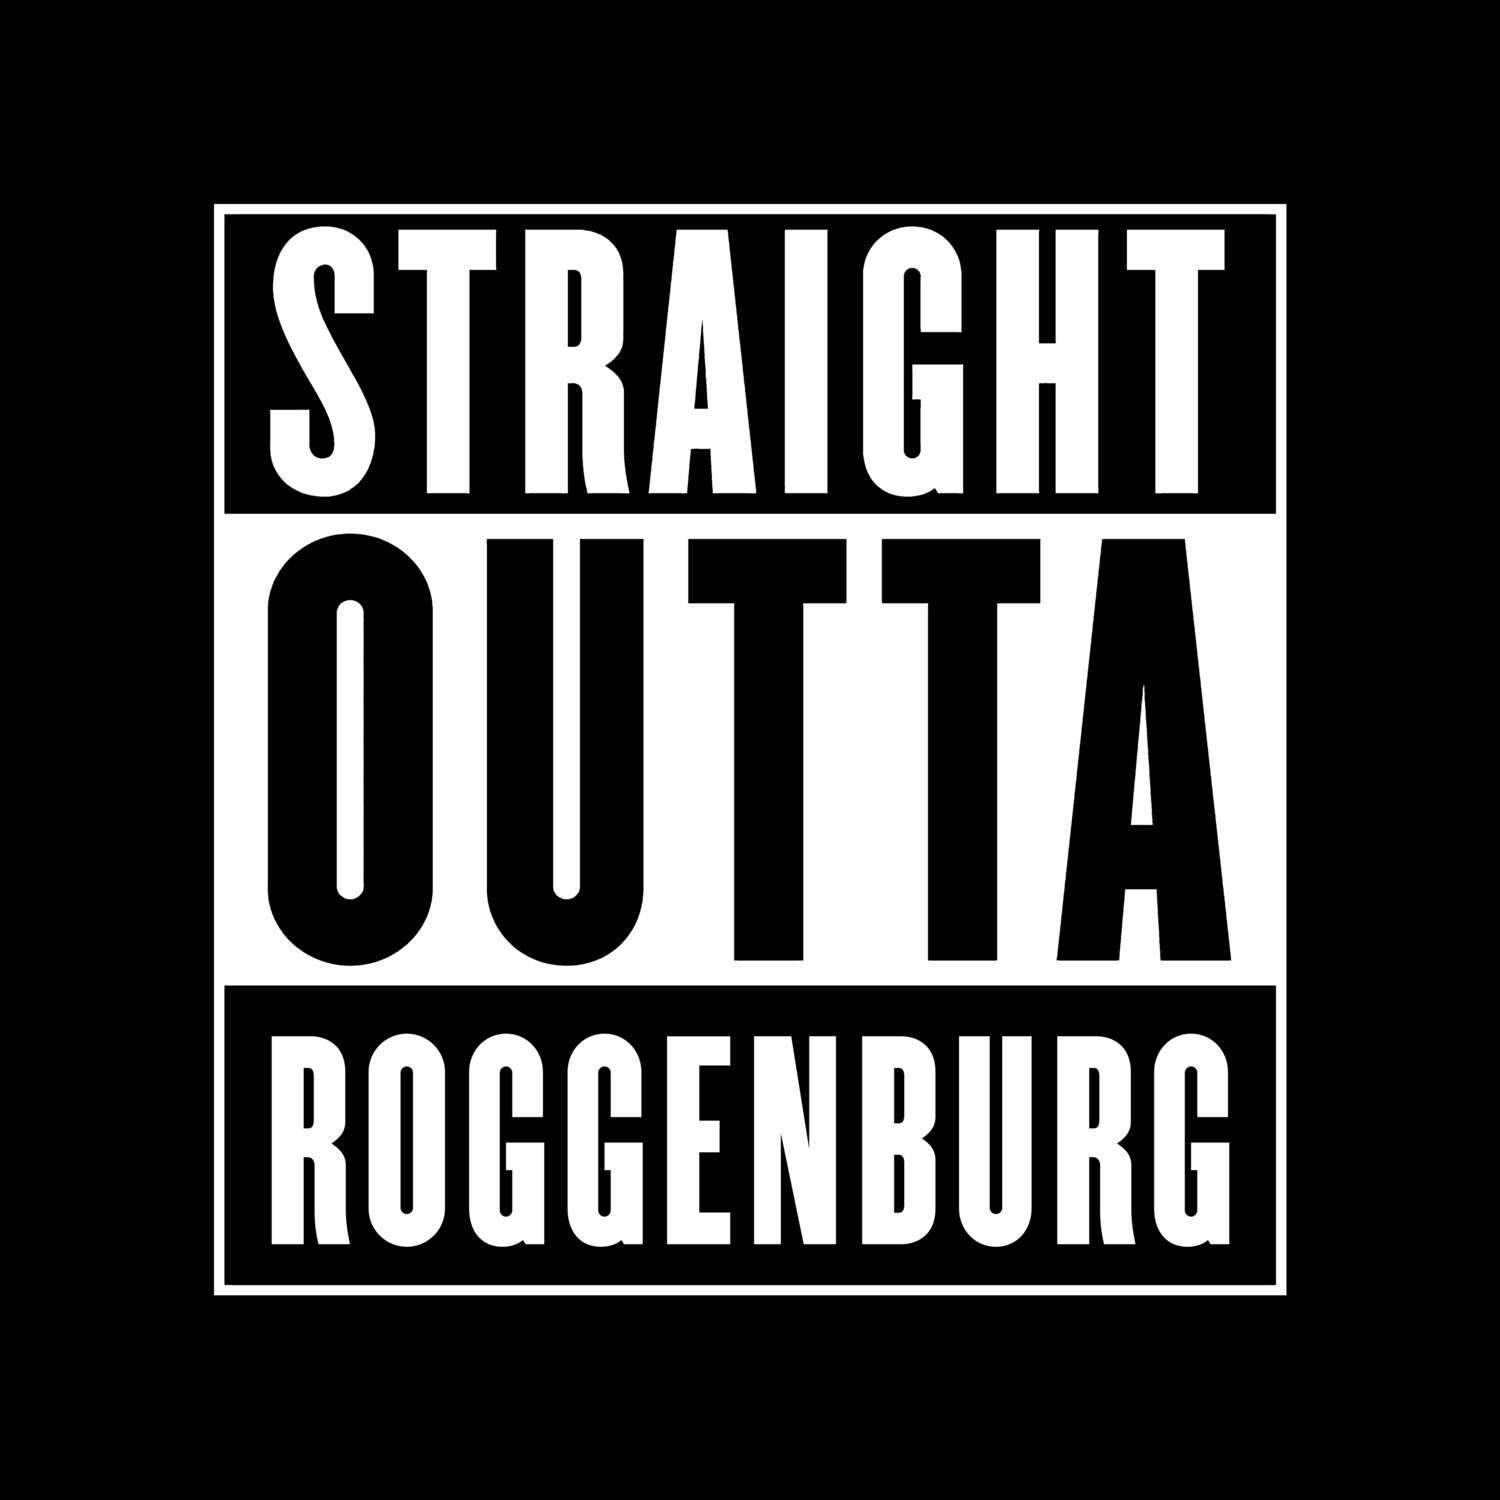 Roggenburg T-Shirt »Straight Outta«